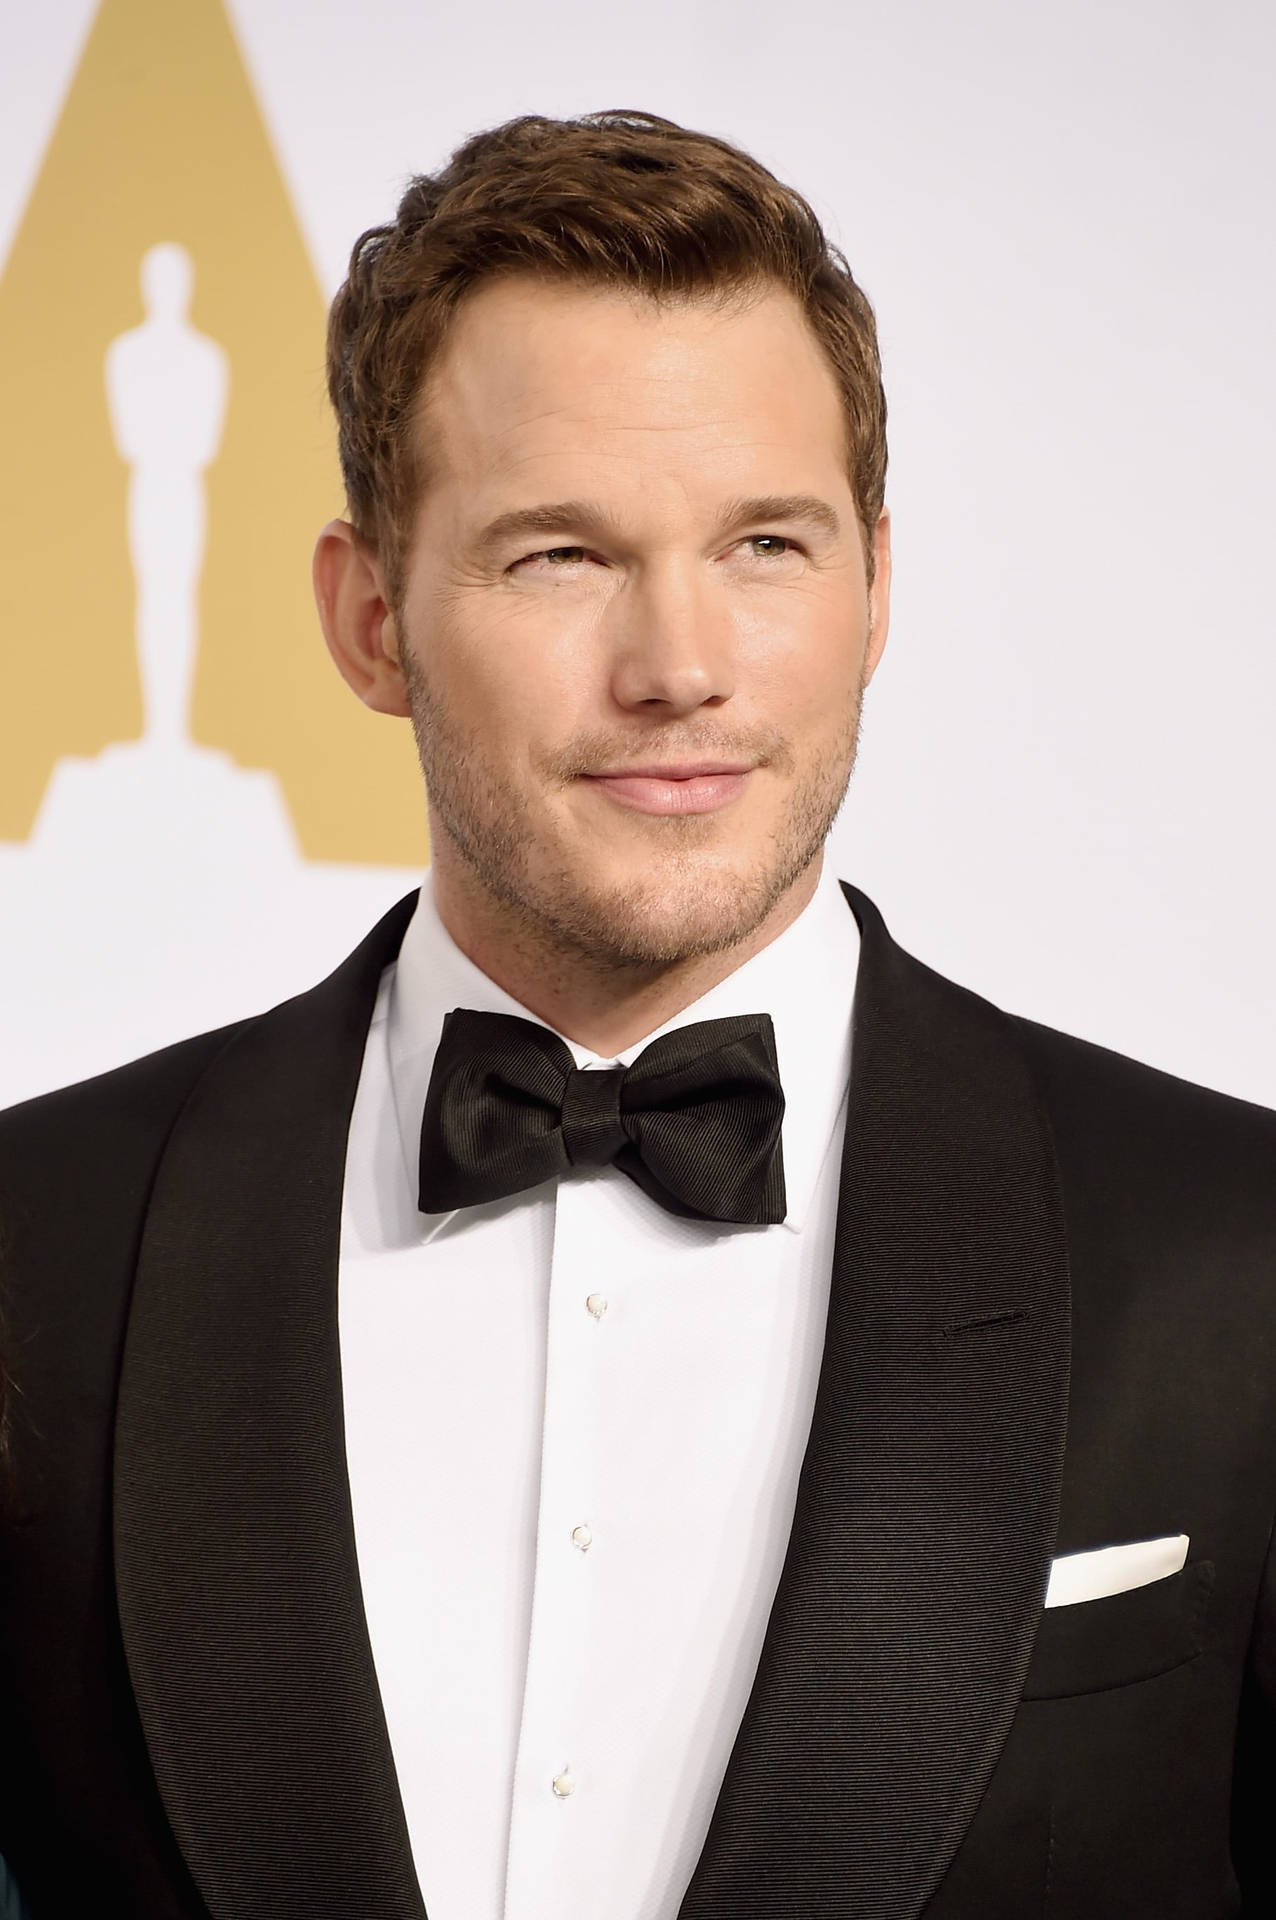 Chris Pratt 2015 Oscars Award Background